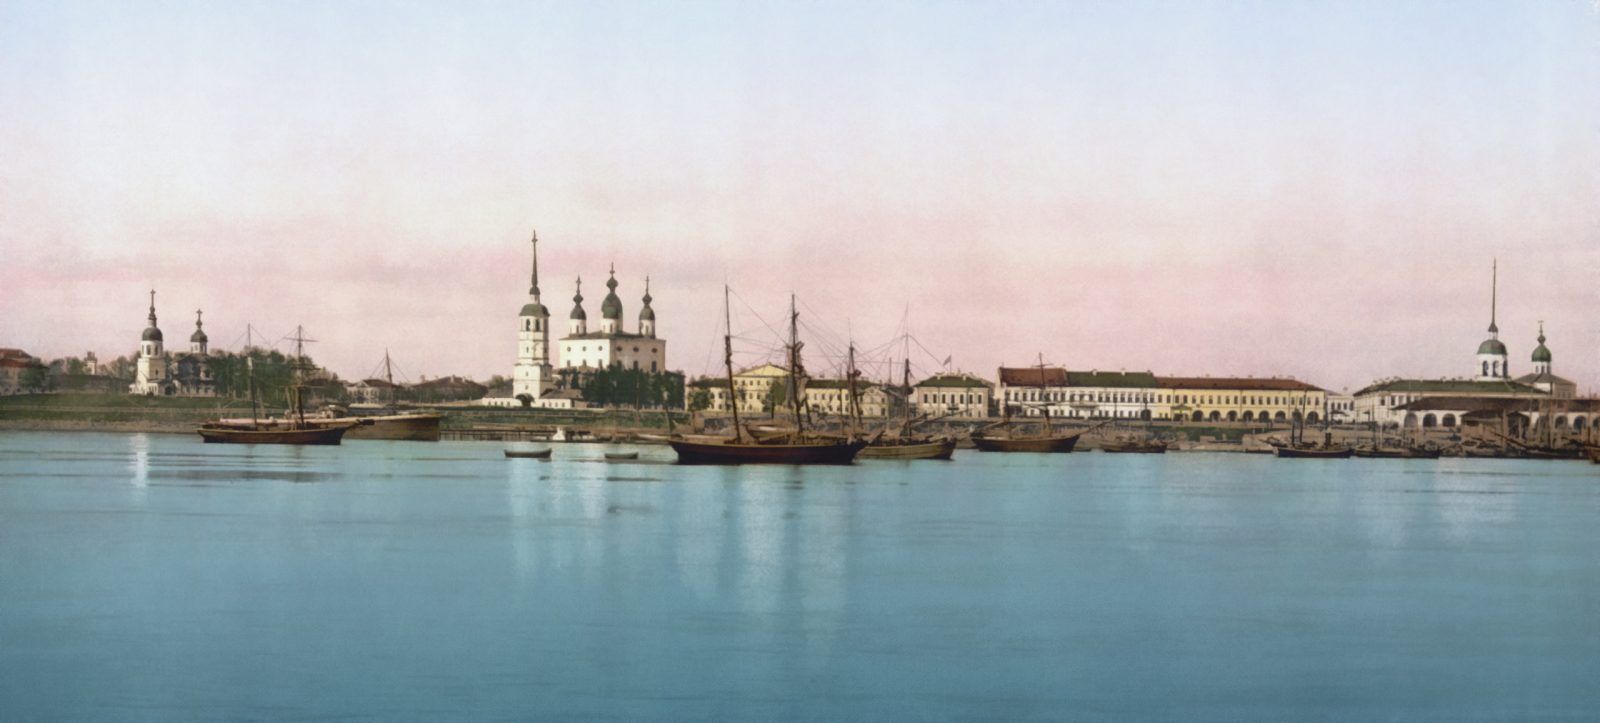 Столица русского Севера... Панорама Архангельска, фотоснимок XIX века